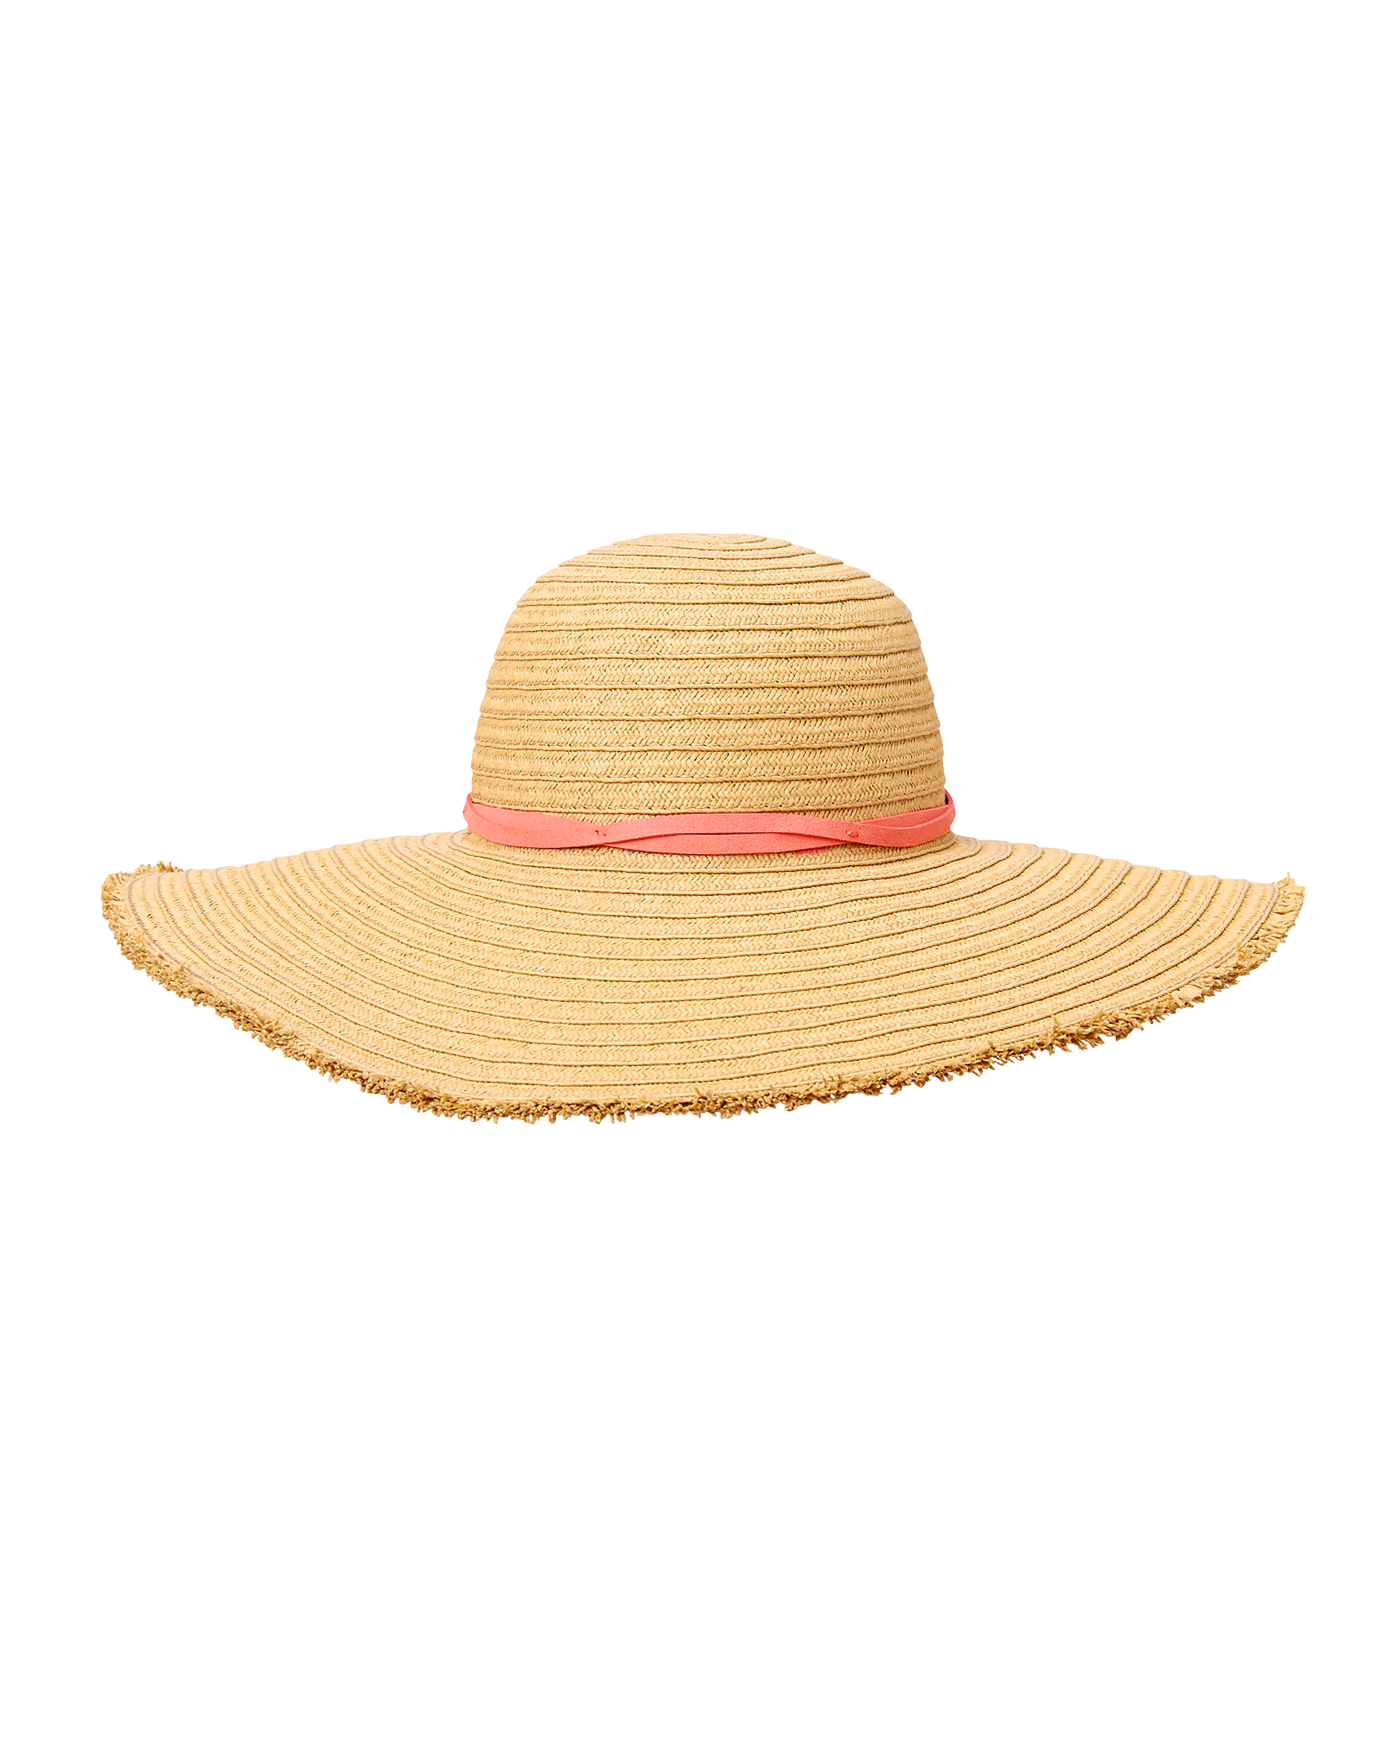 Straw Sun Hat